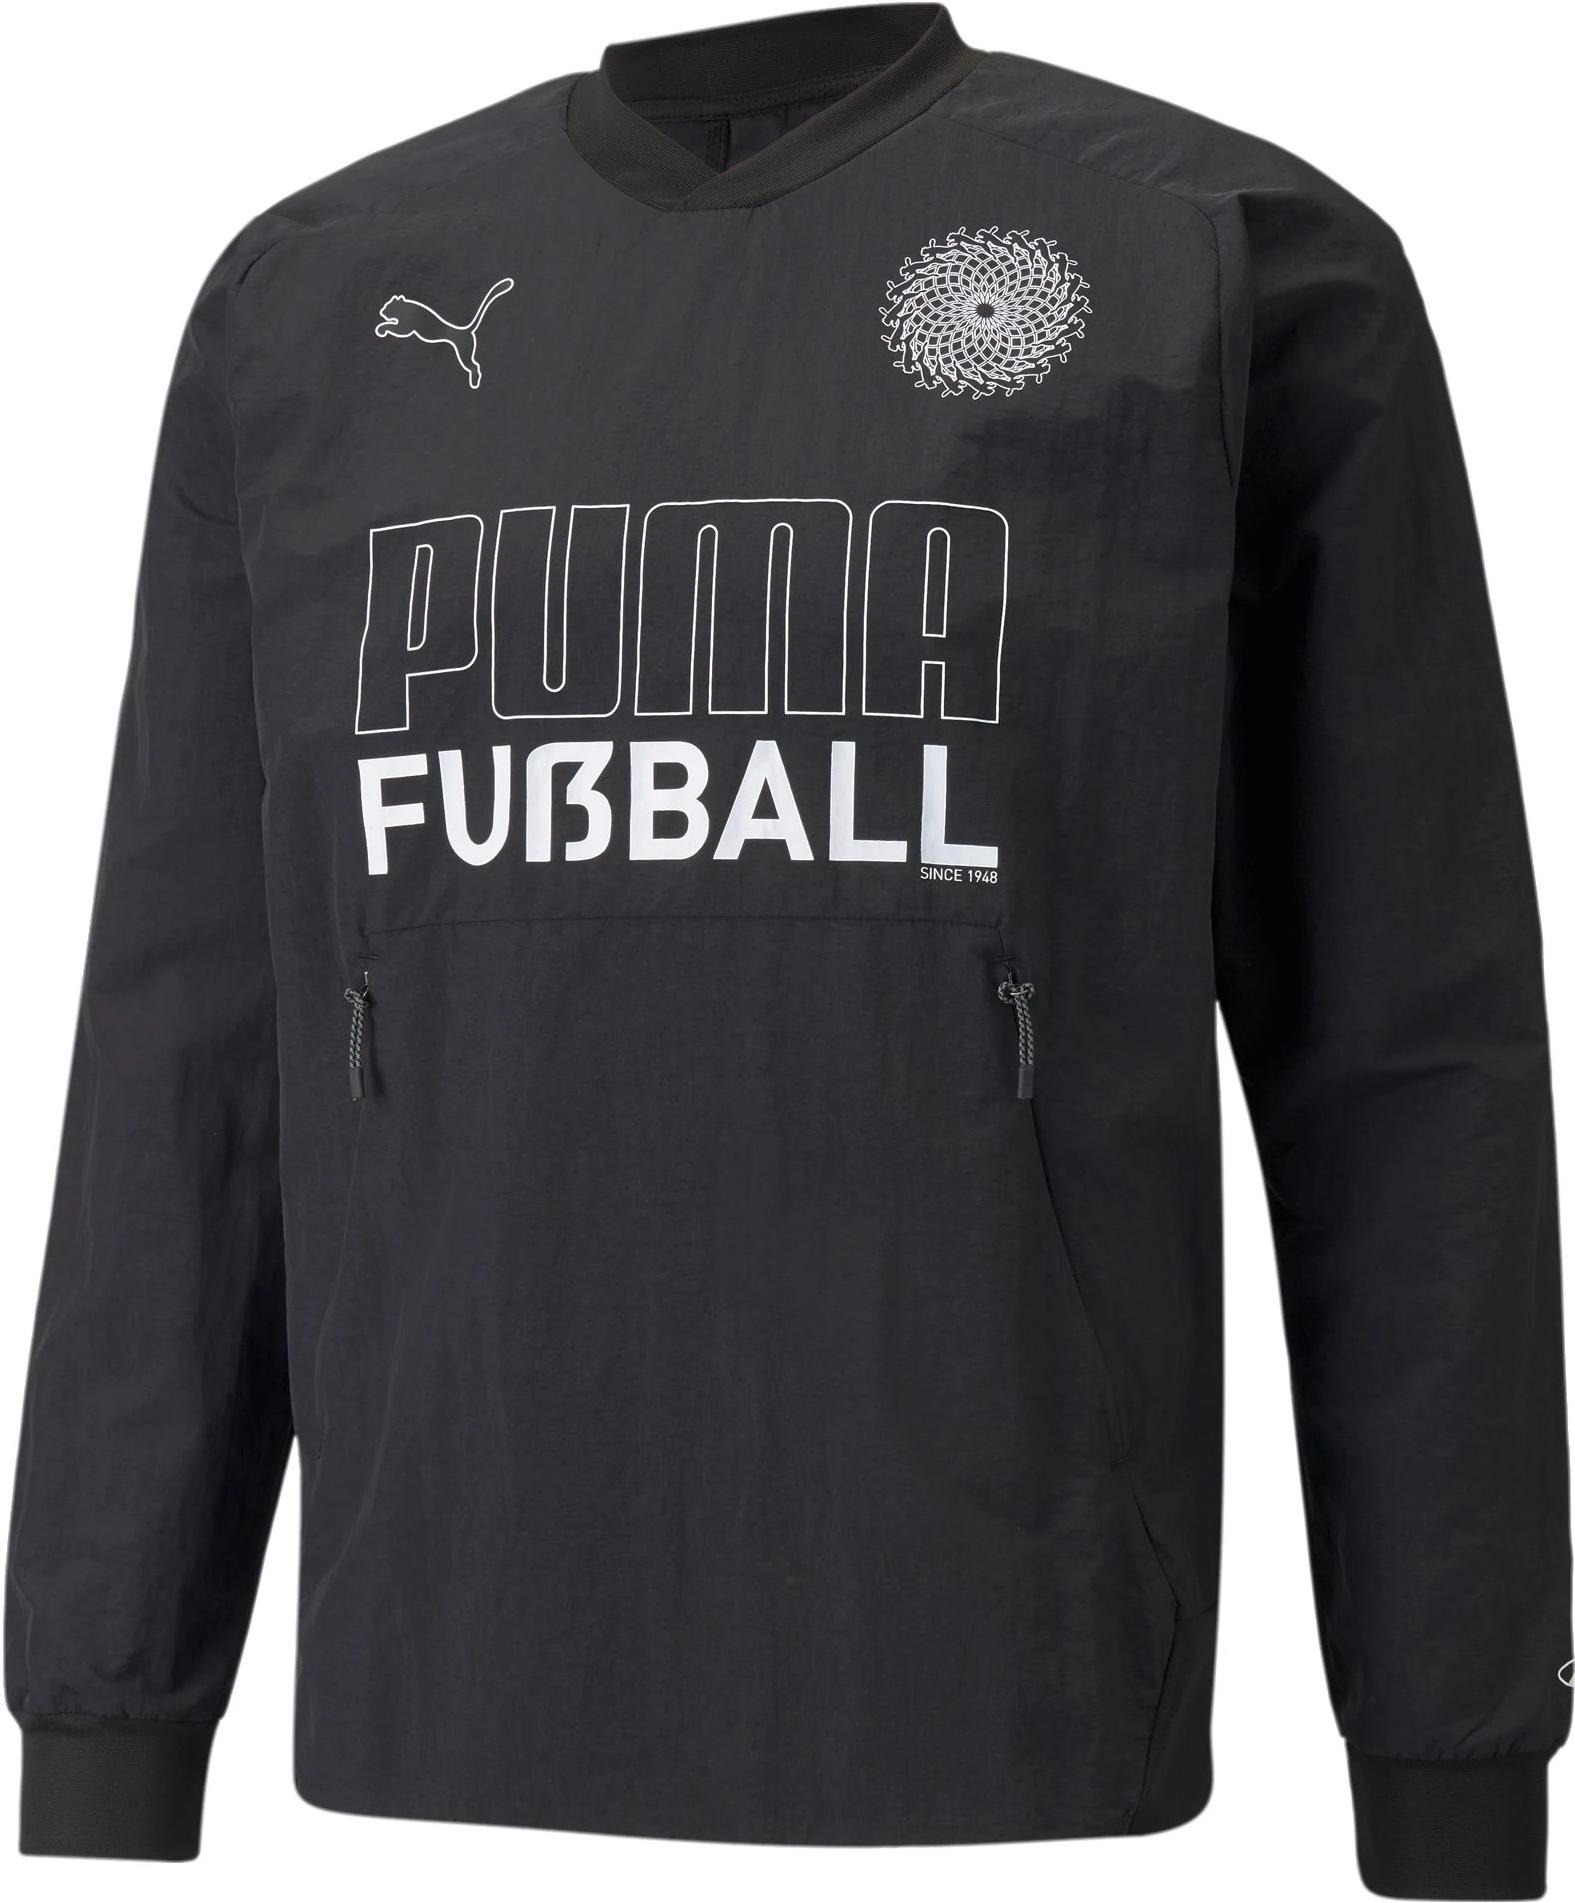 Langarm-T-Shirt Puma FUßBALL KING Drill Top